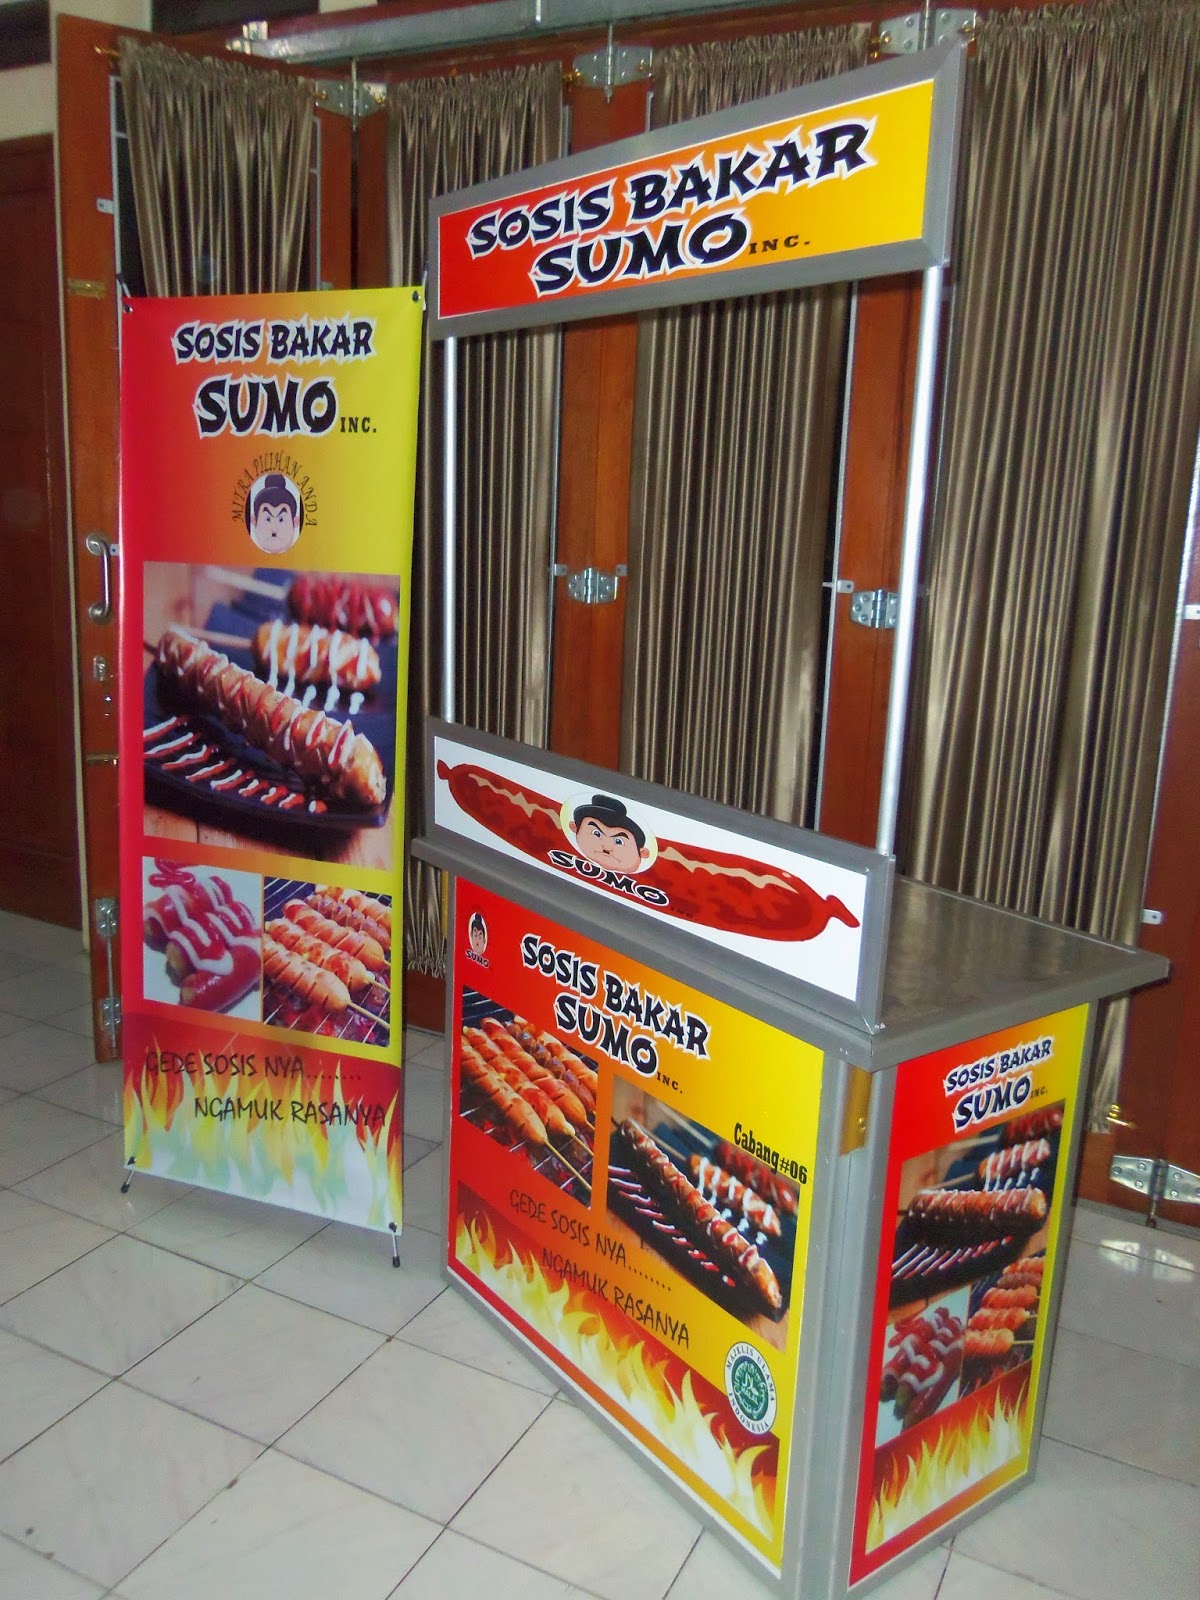 Sosis Bakar Sumo Inc.: HOT PRICE!!! PAKET KEMITRAAN 